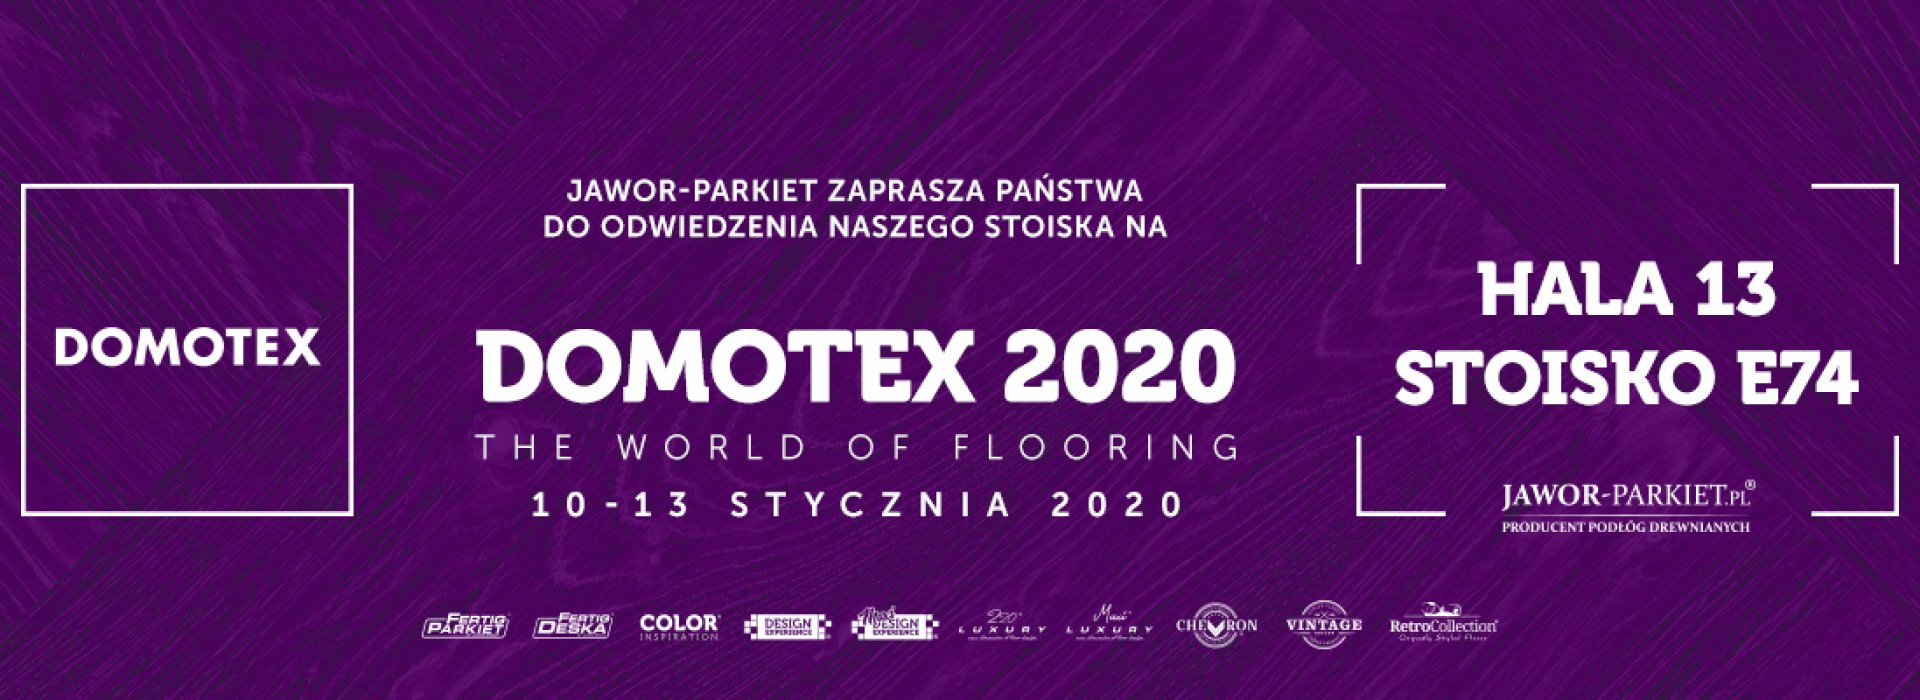 domotex-slider-2020-pl.jpg